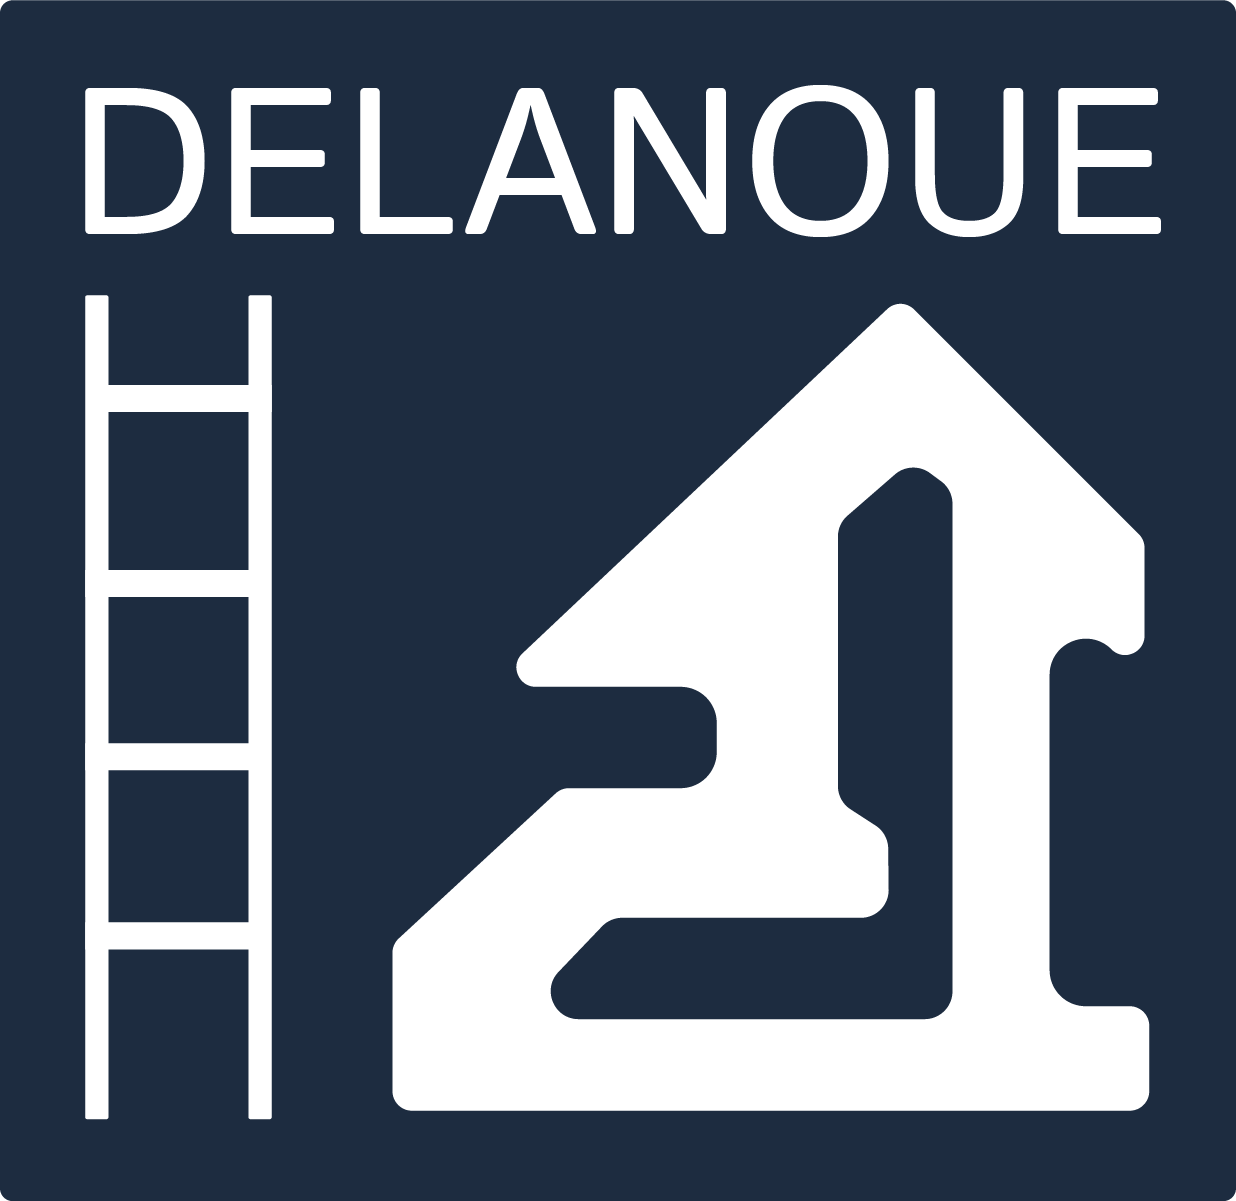 Delanoue-Metallerie-chaudronnerie